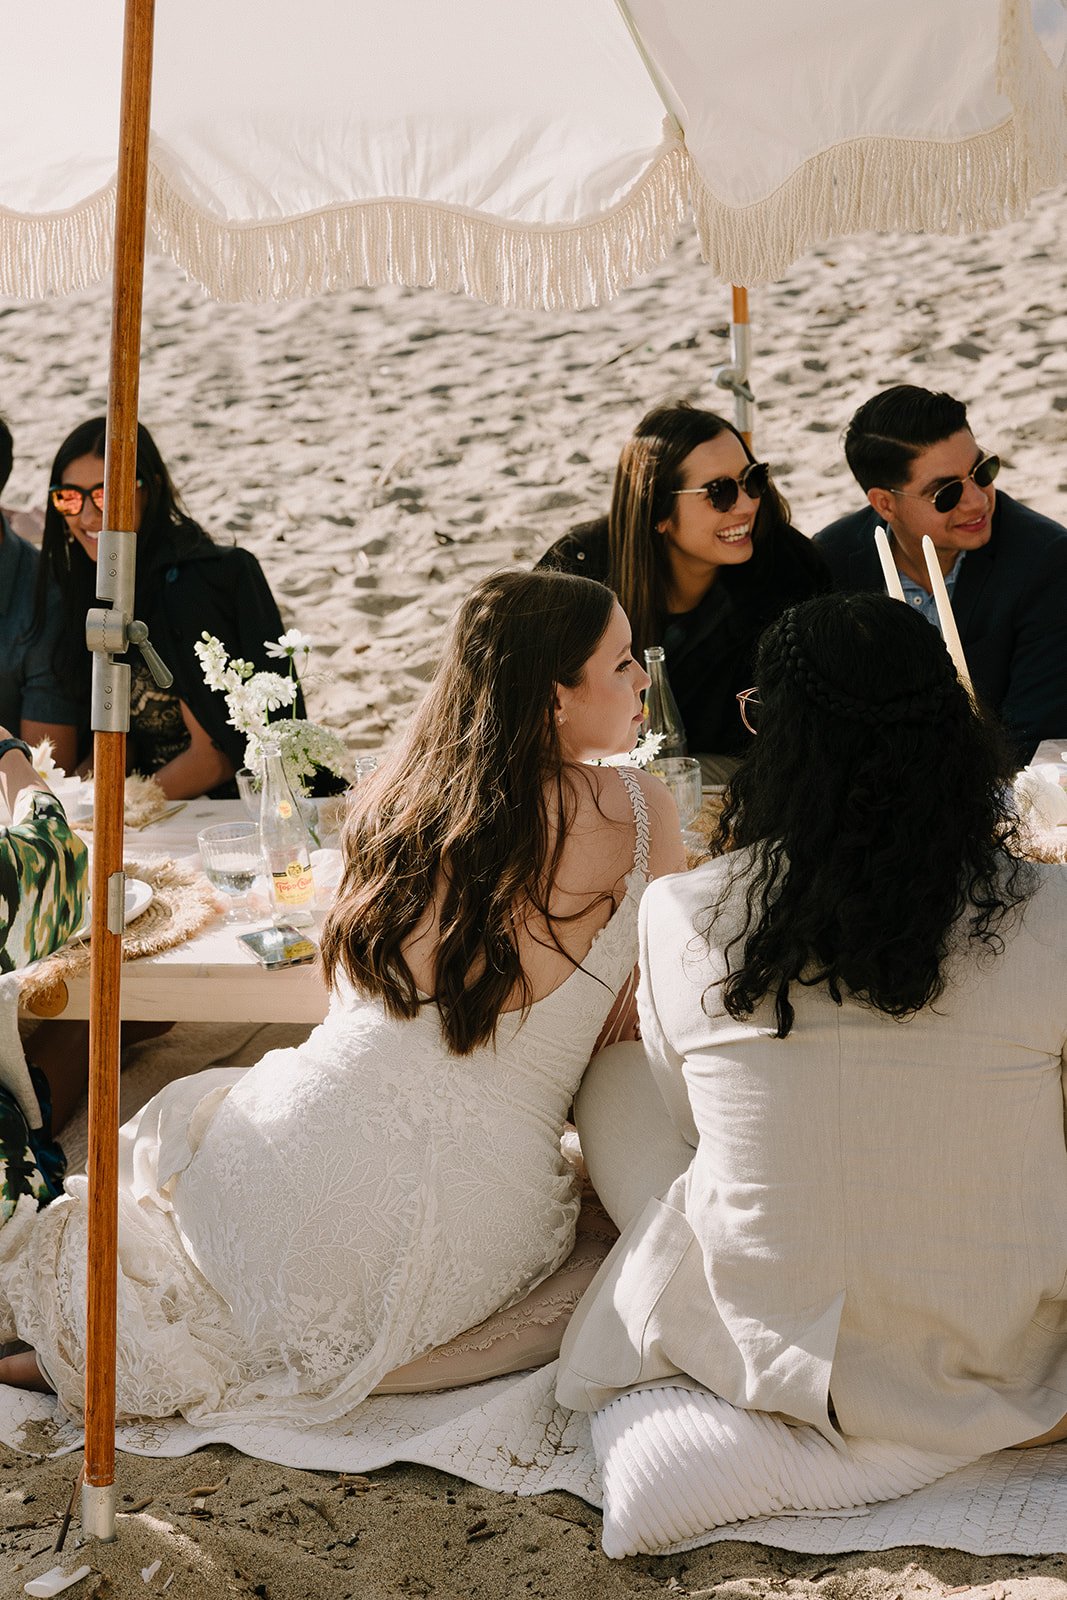 Intimate Malibu Elopement on The Beach - Natalie Nicole Photo - Destination Wedding Photographer (85).jpg